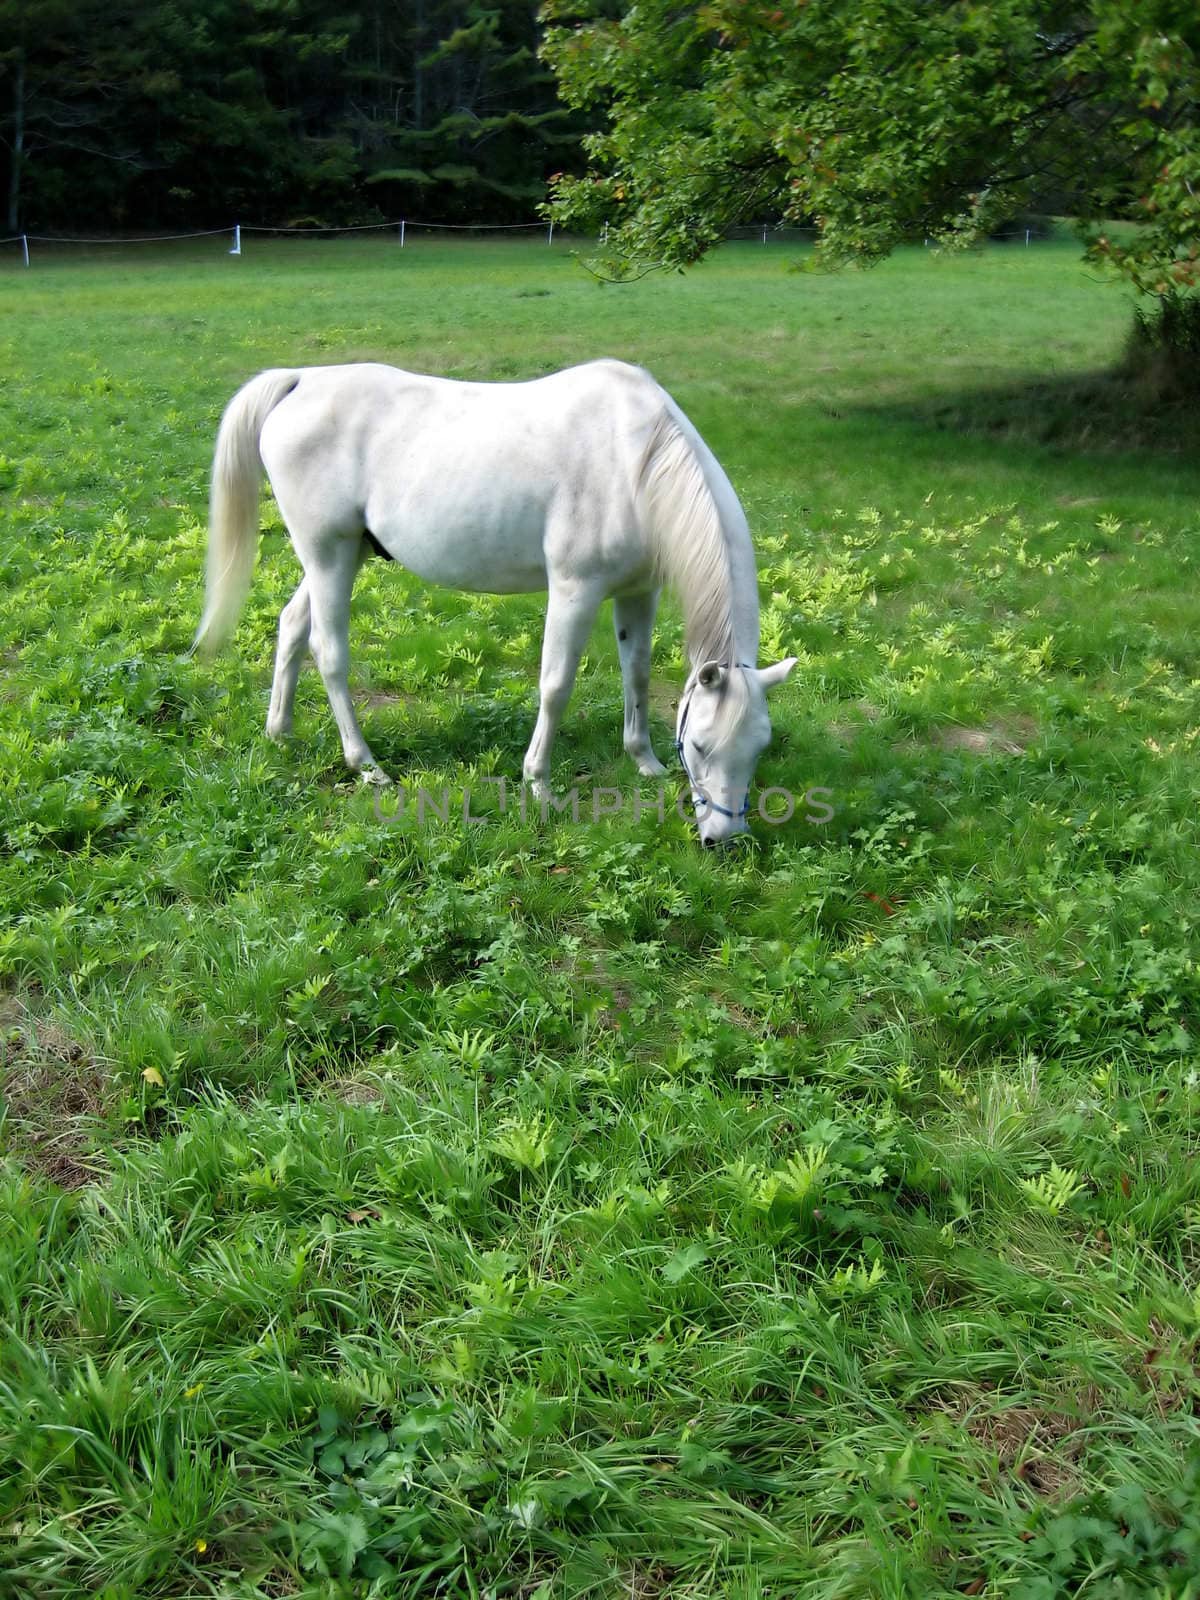 in a green field, a dappled gray horse grazes